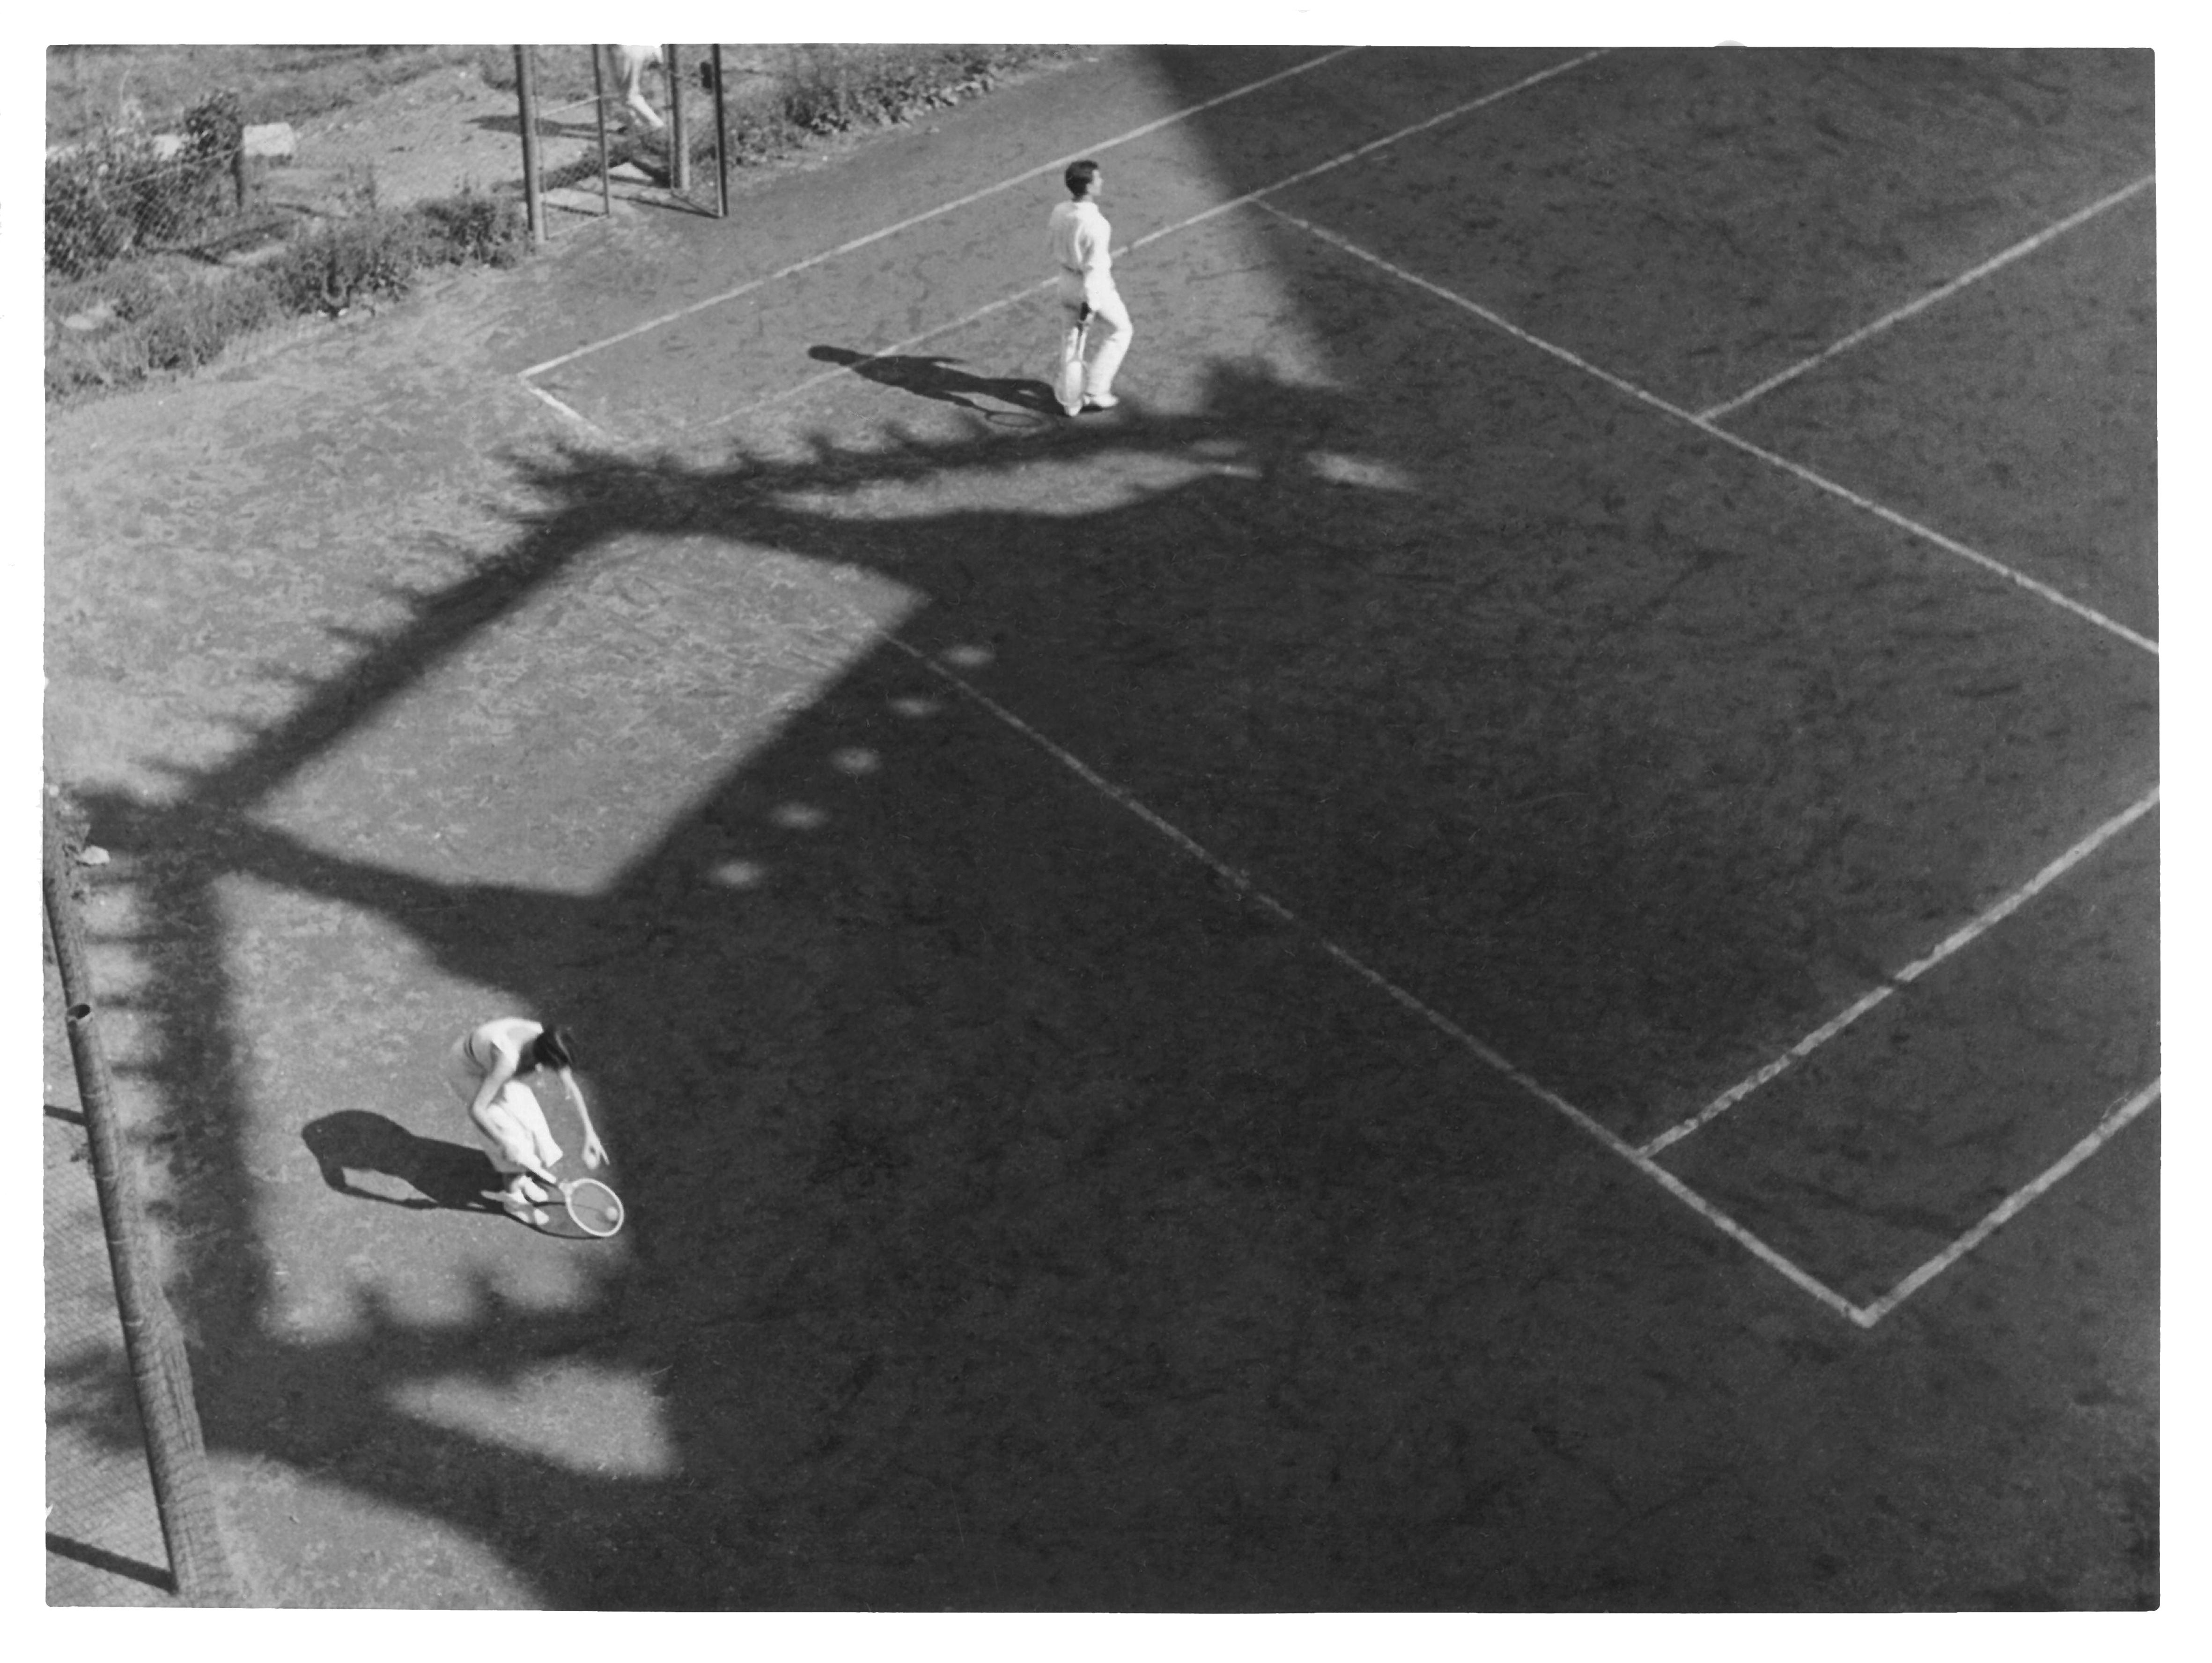  Iván Hevesy: Tennis Court I., 1934–1941, gelatin silver print, Budapest, Mihály Medve Collection  